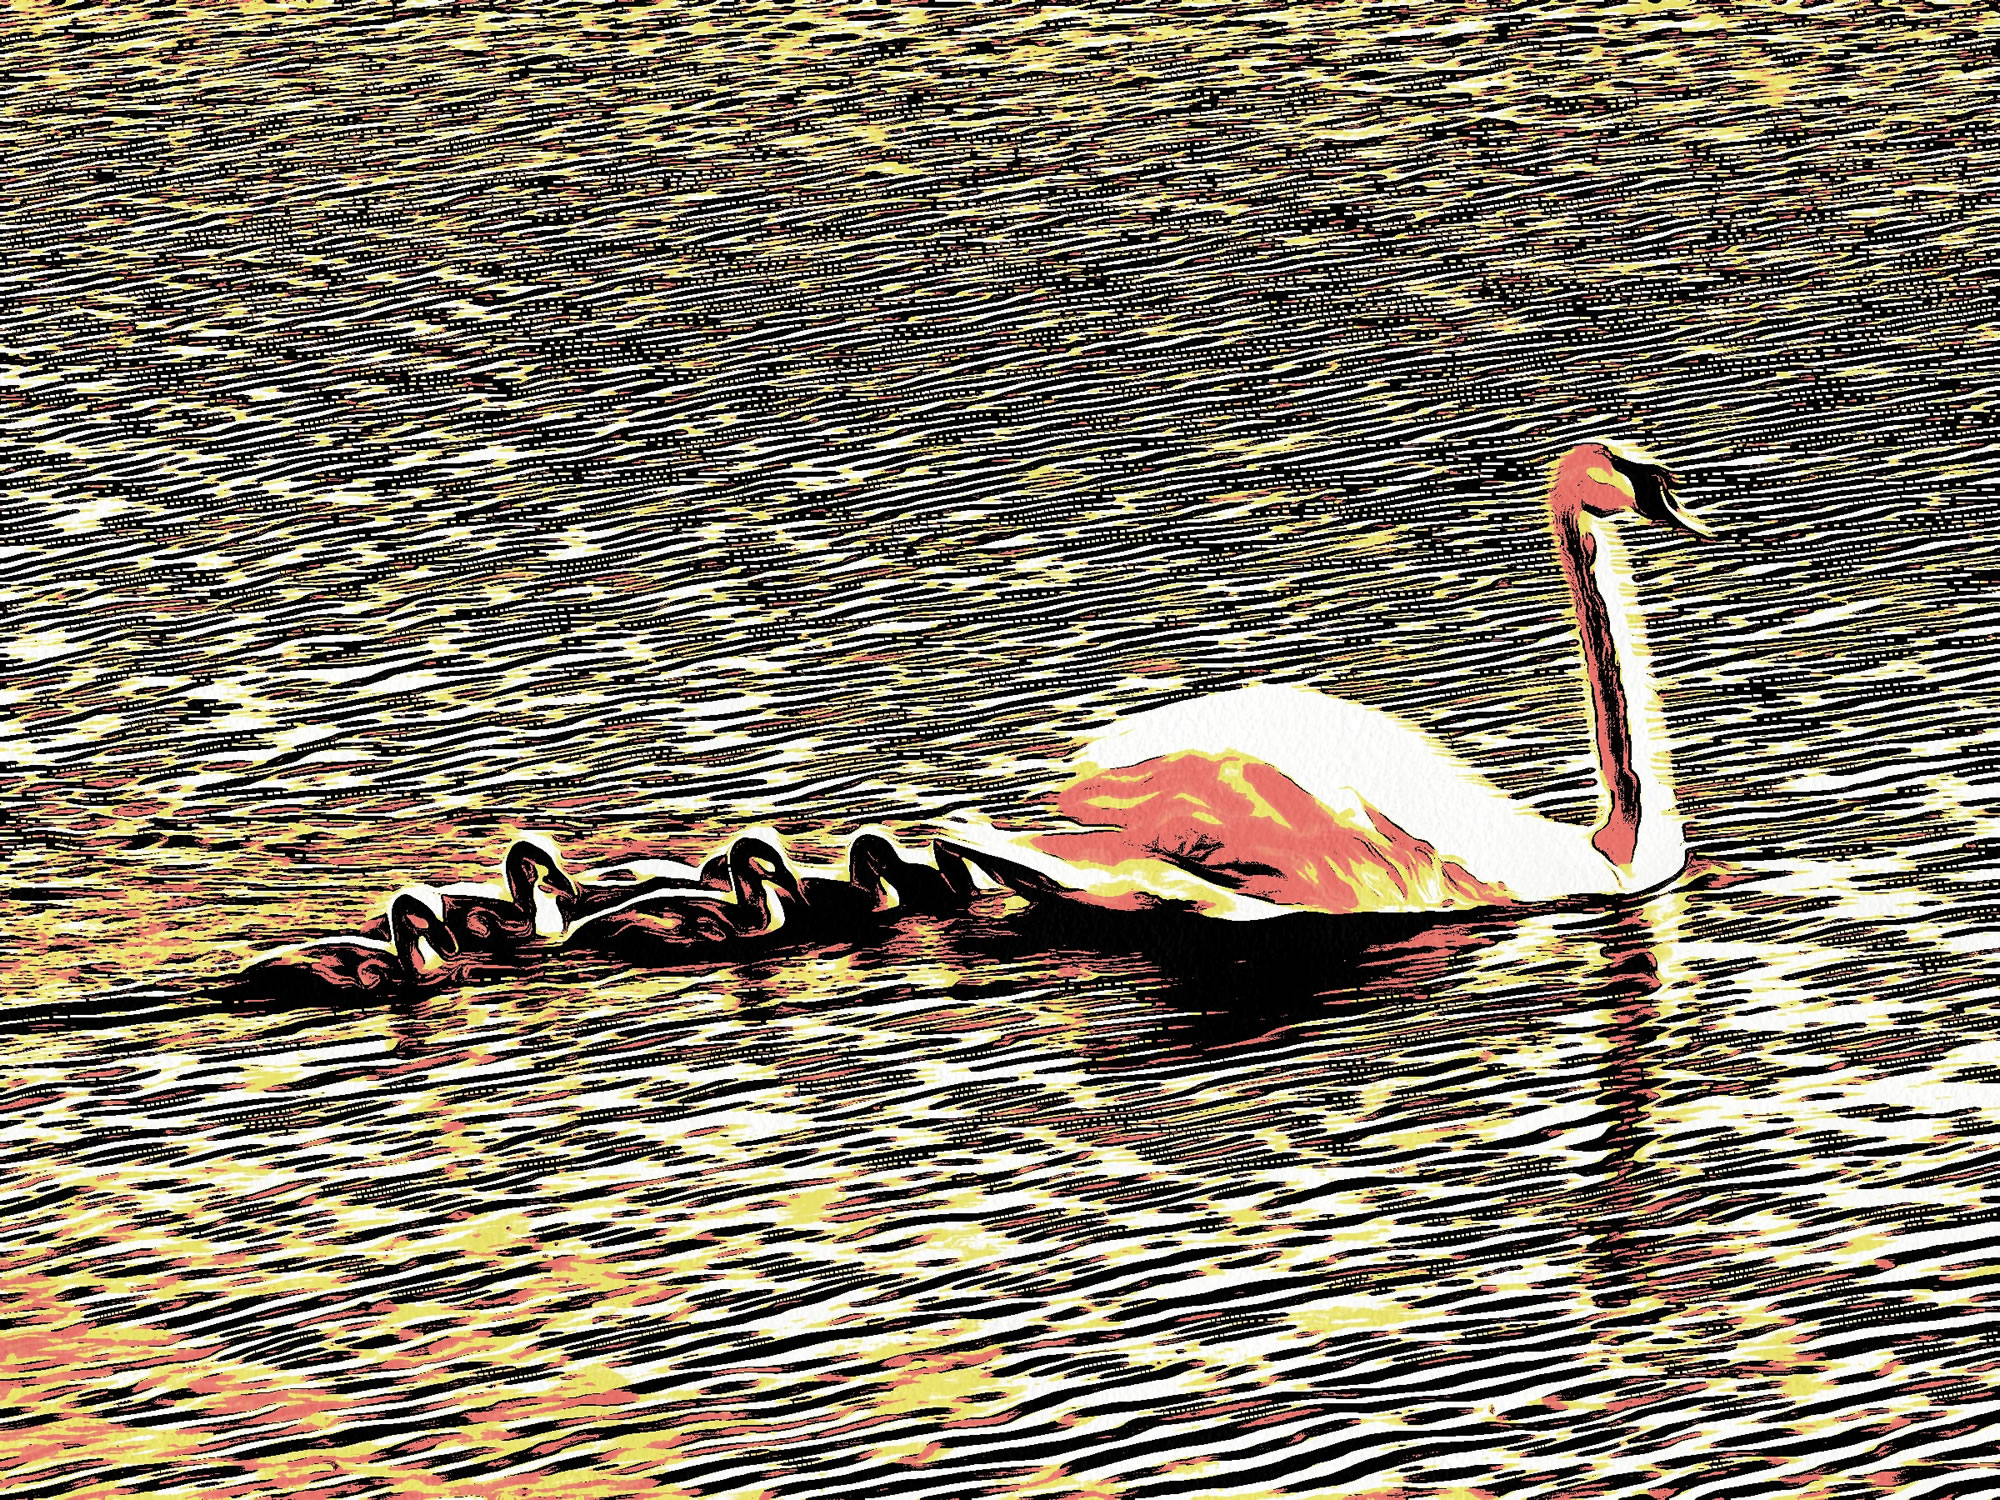 Swan art picture 52 - art image 4